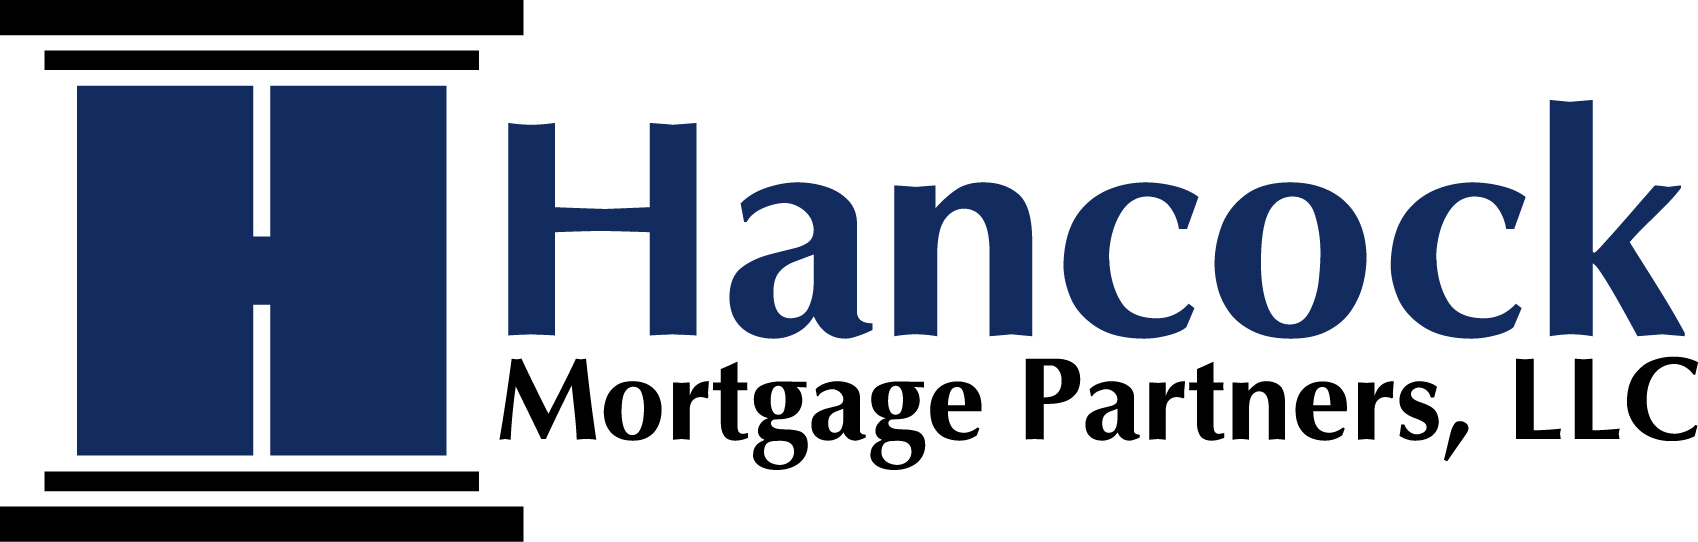 Hancock_Mortgage_Partners